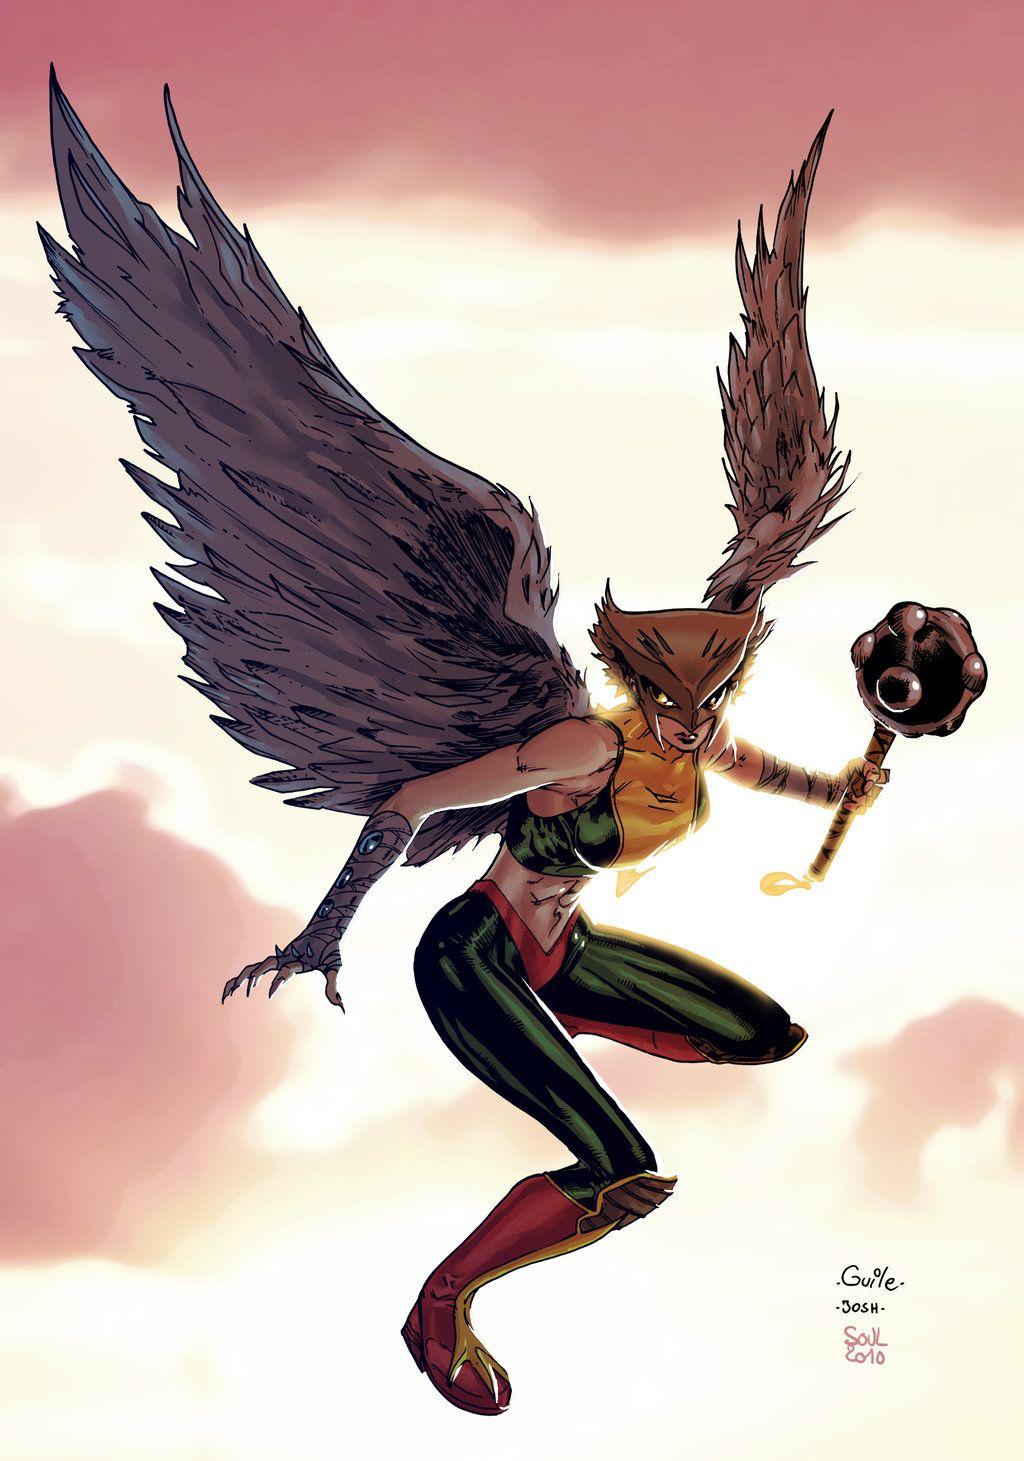 Hawkgirl Art